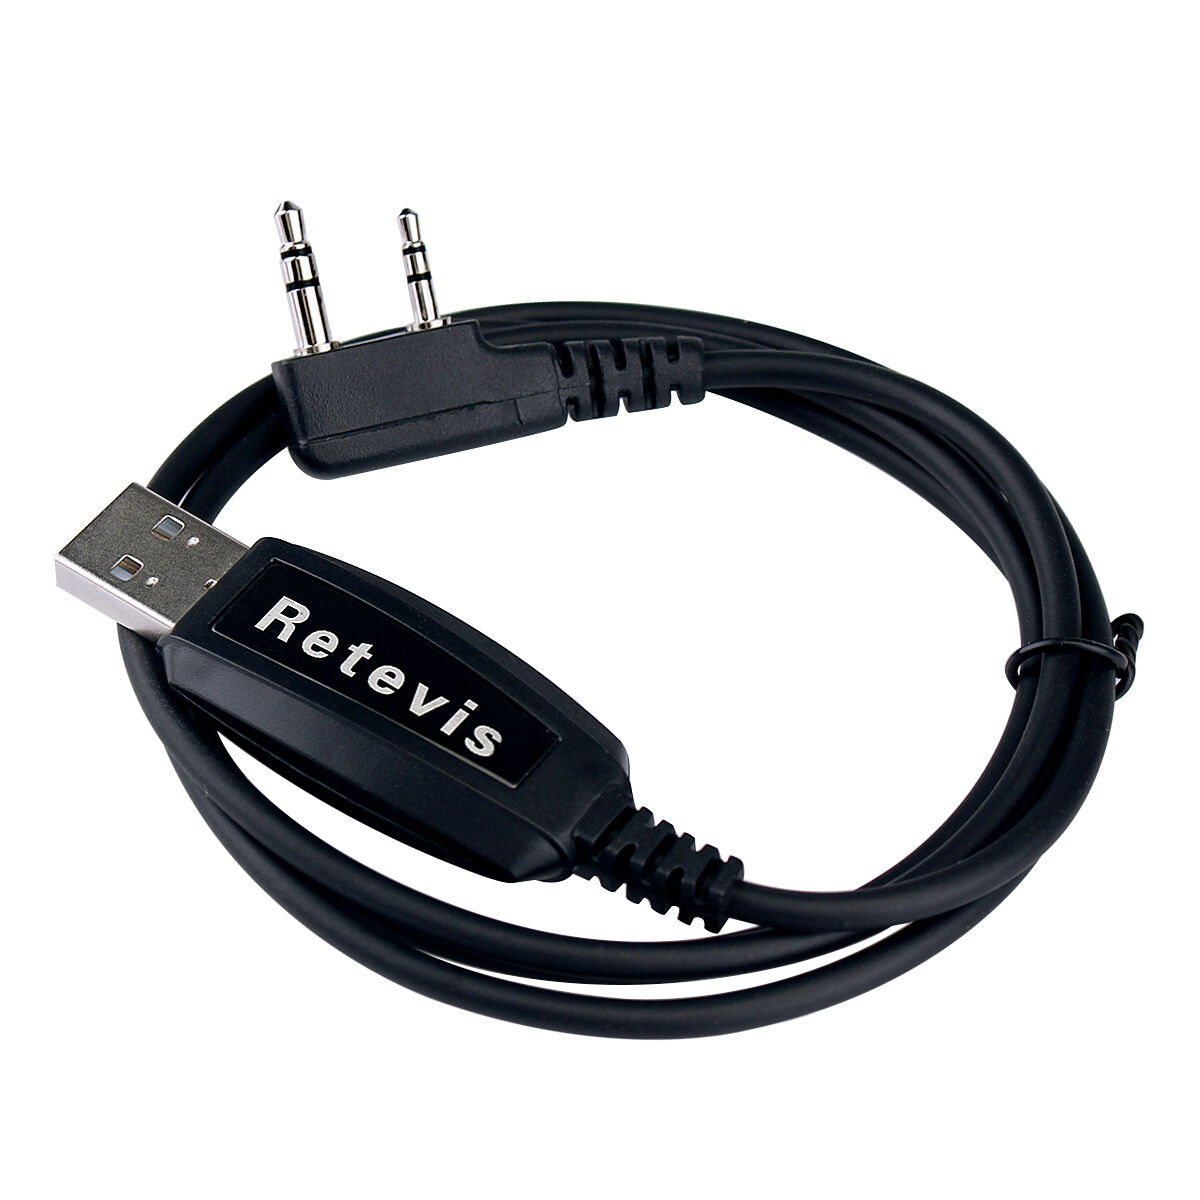 Original USB Programming Cable for Retevis RT3 RT8